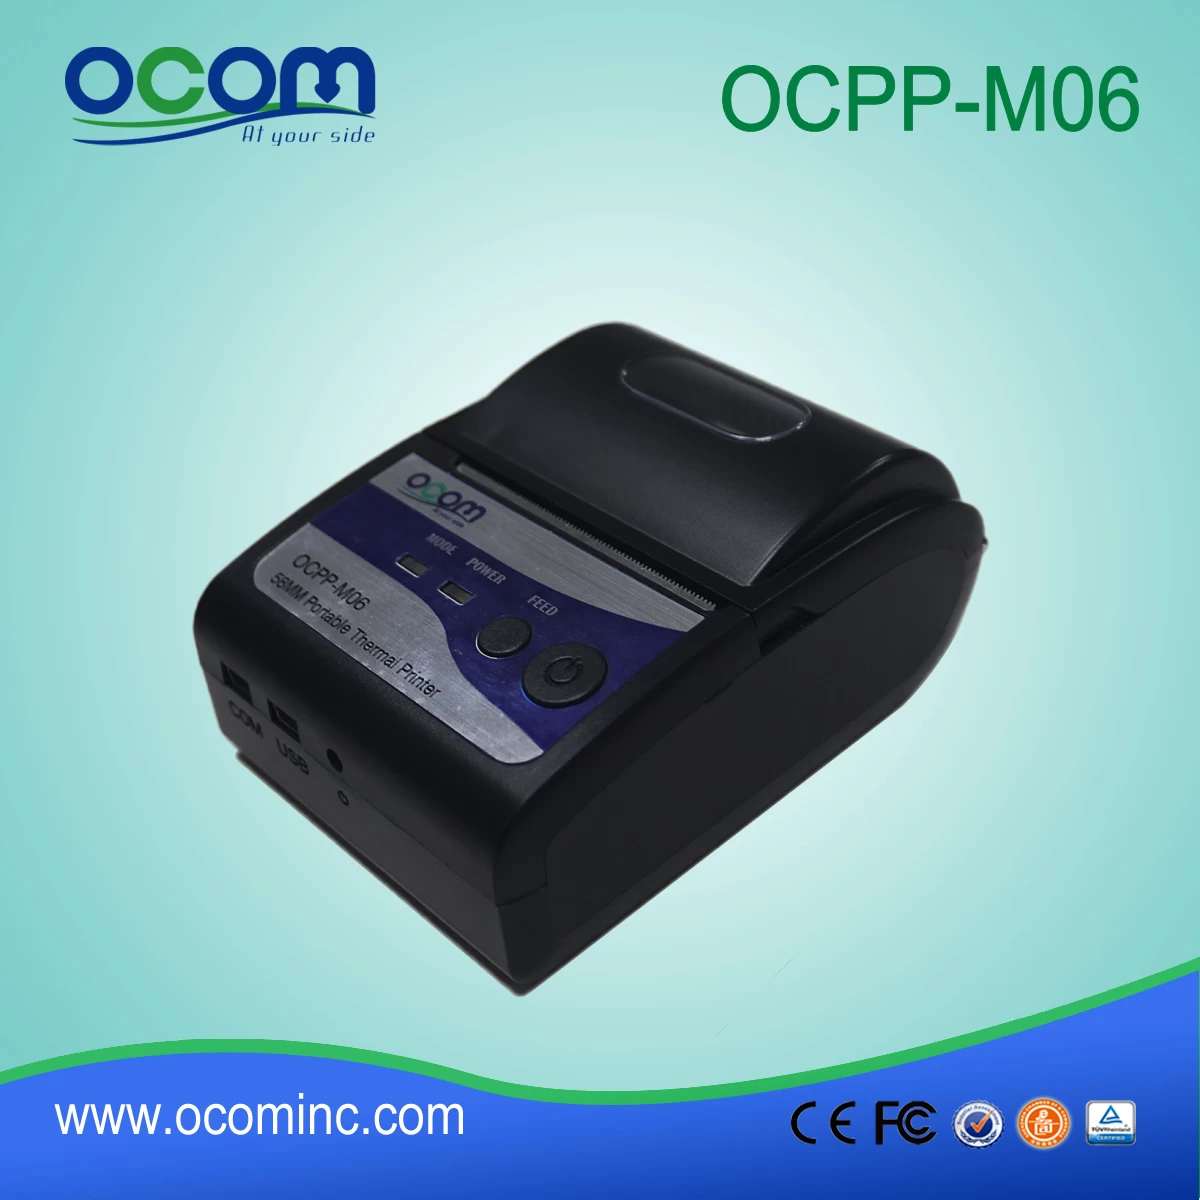 58mm mini portable handheld printer made in China (OCPP-M06)